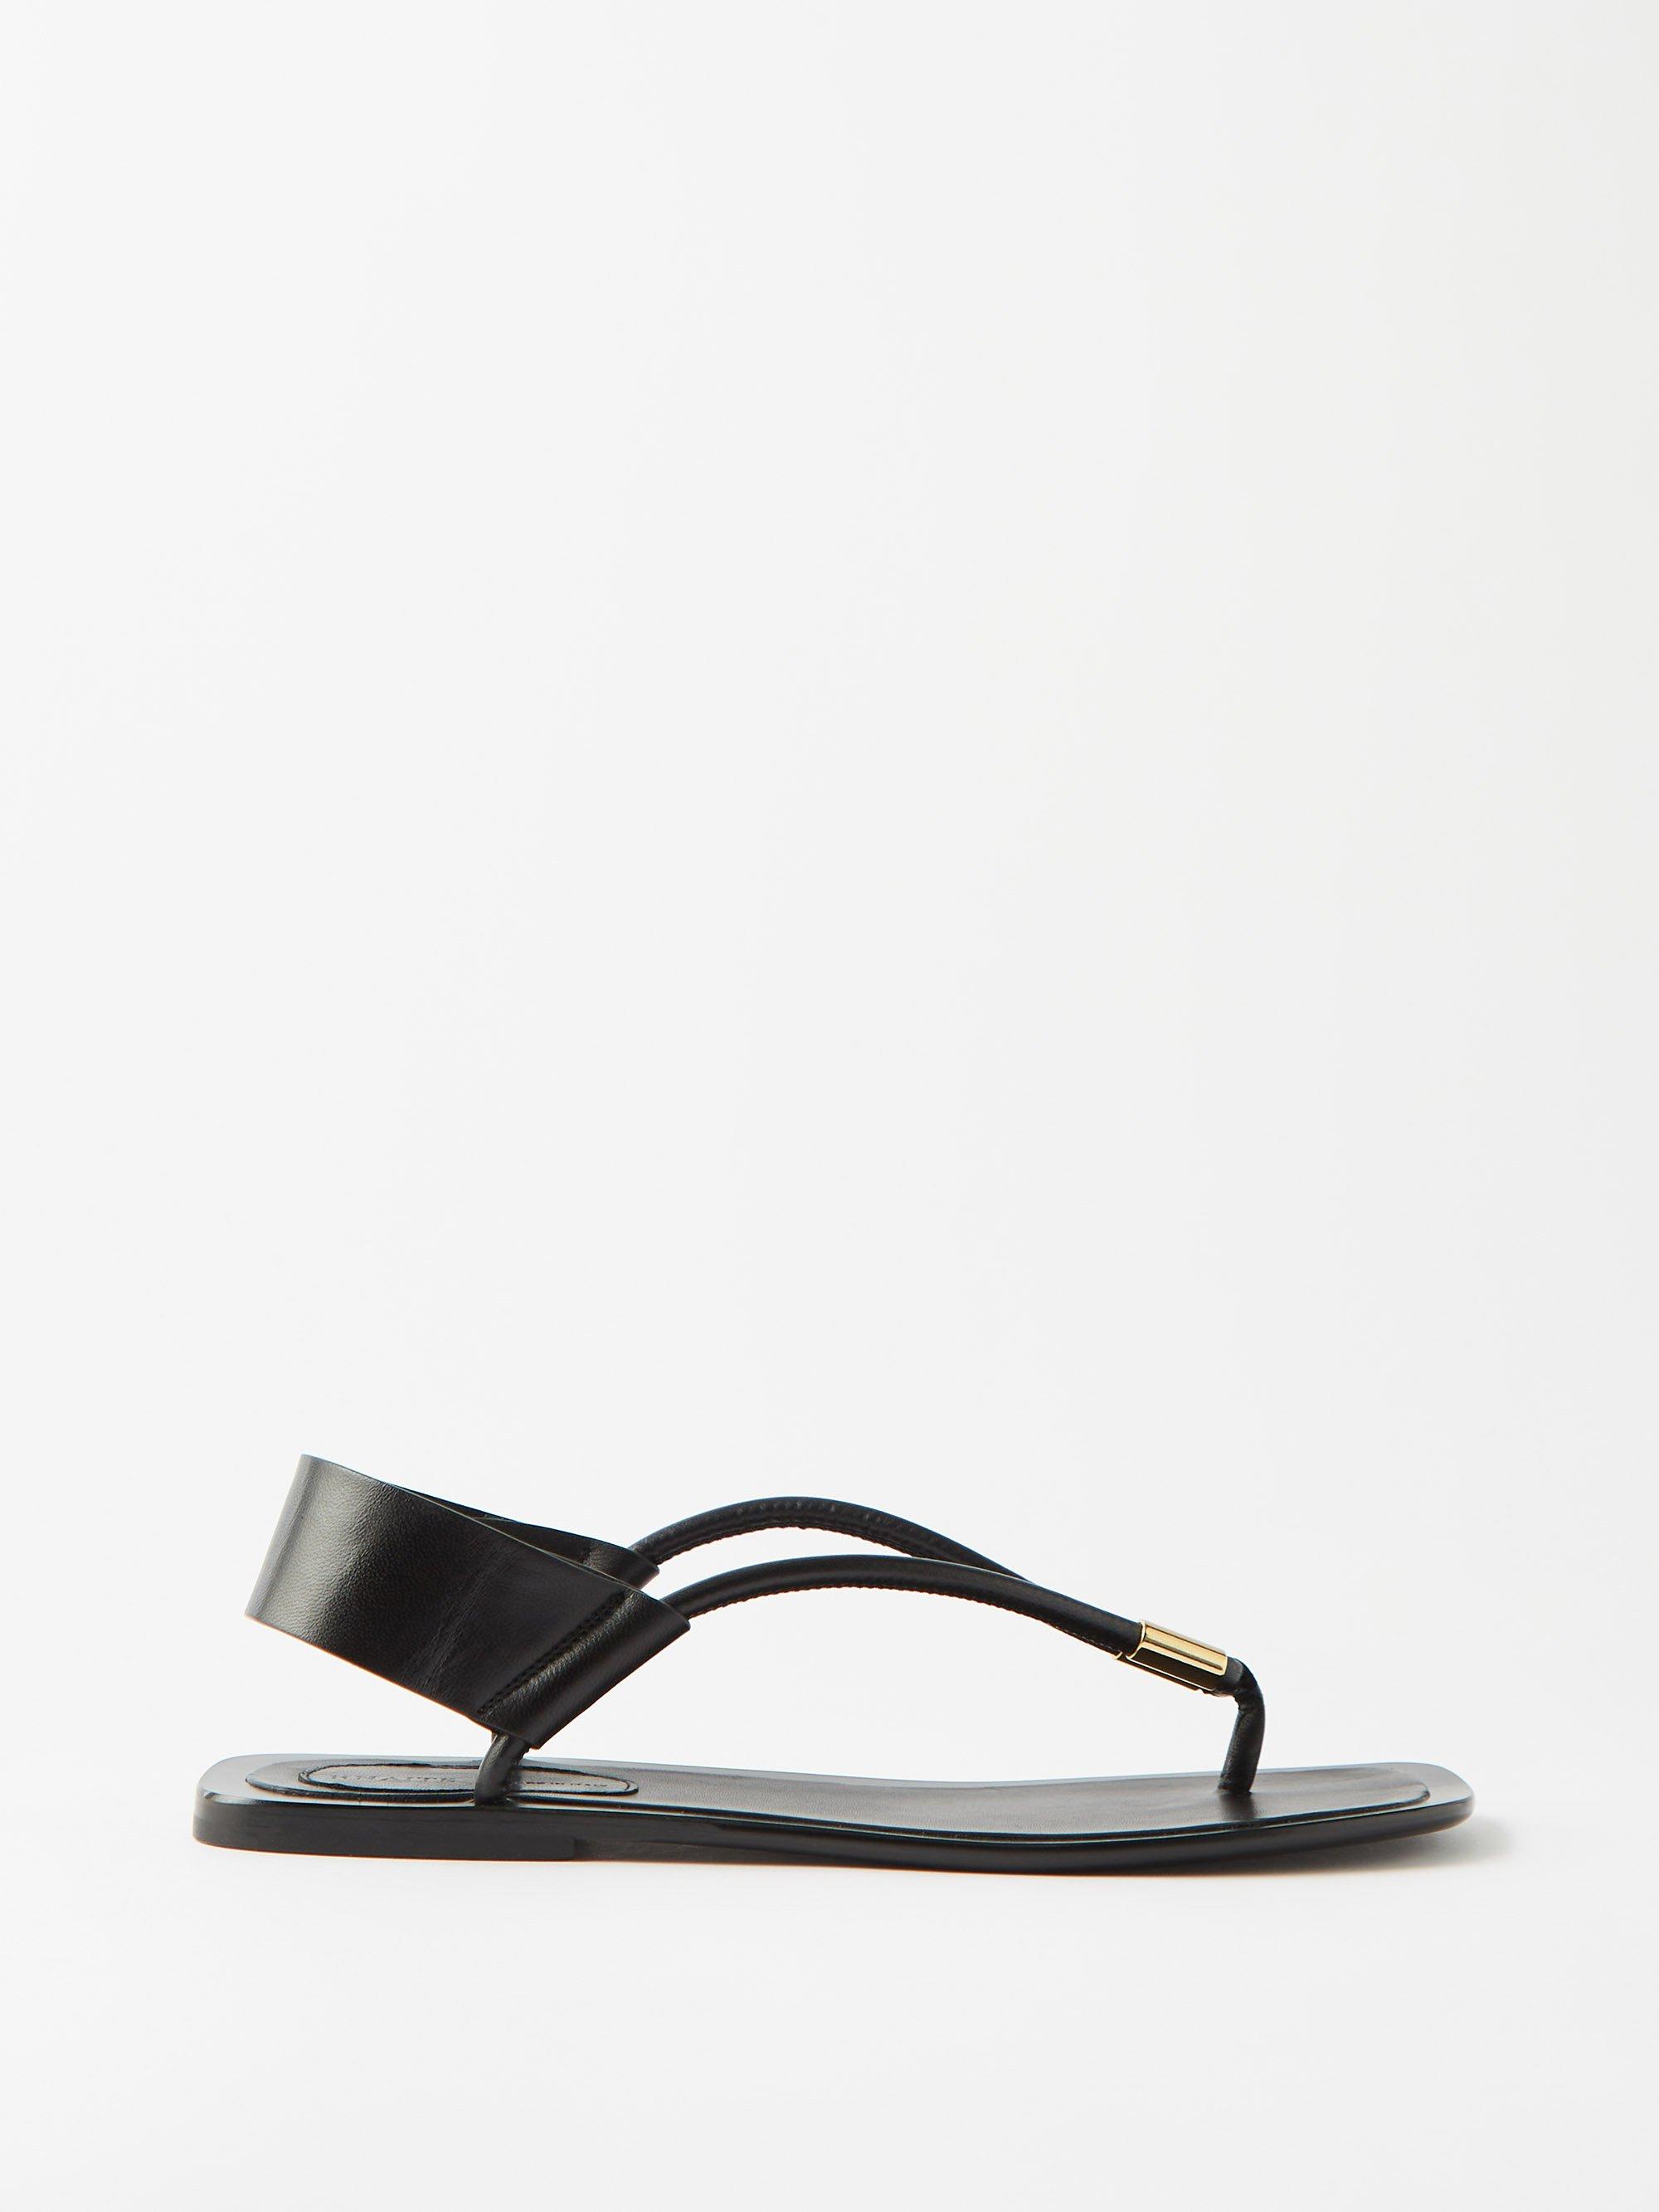 Khaite Devoe Leather Sandals in Black | Lyst